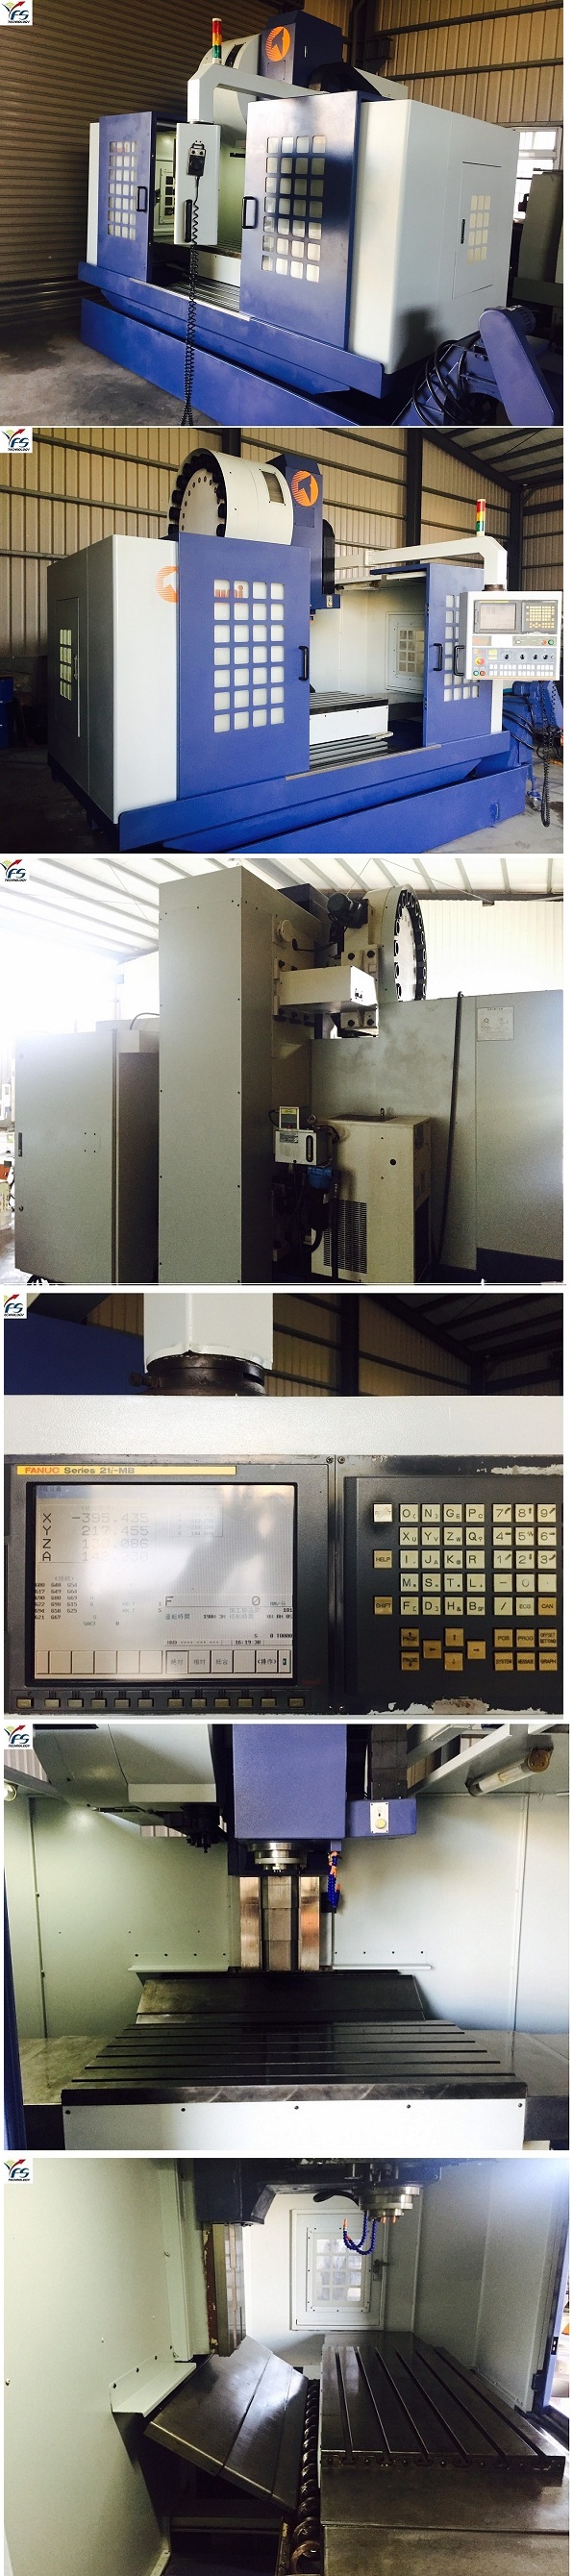 Takumi,V-11,Vertical Machining Center,Box Way,Used Machine Tools,CNC Milling